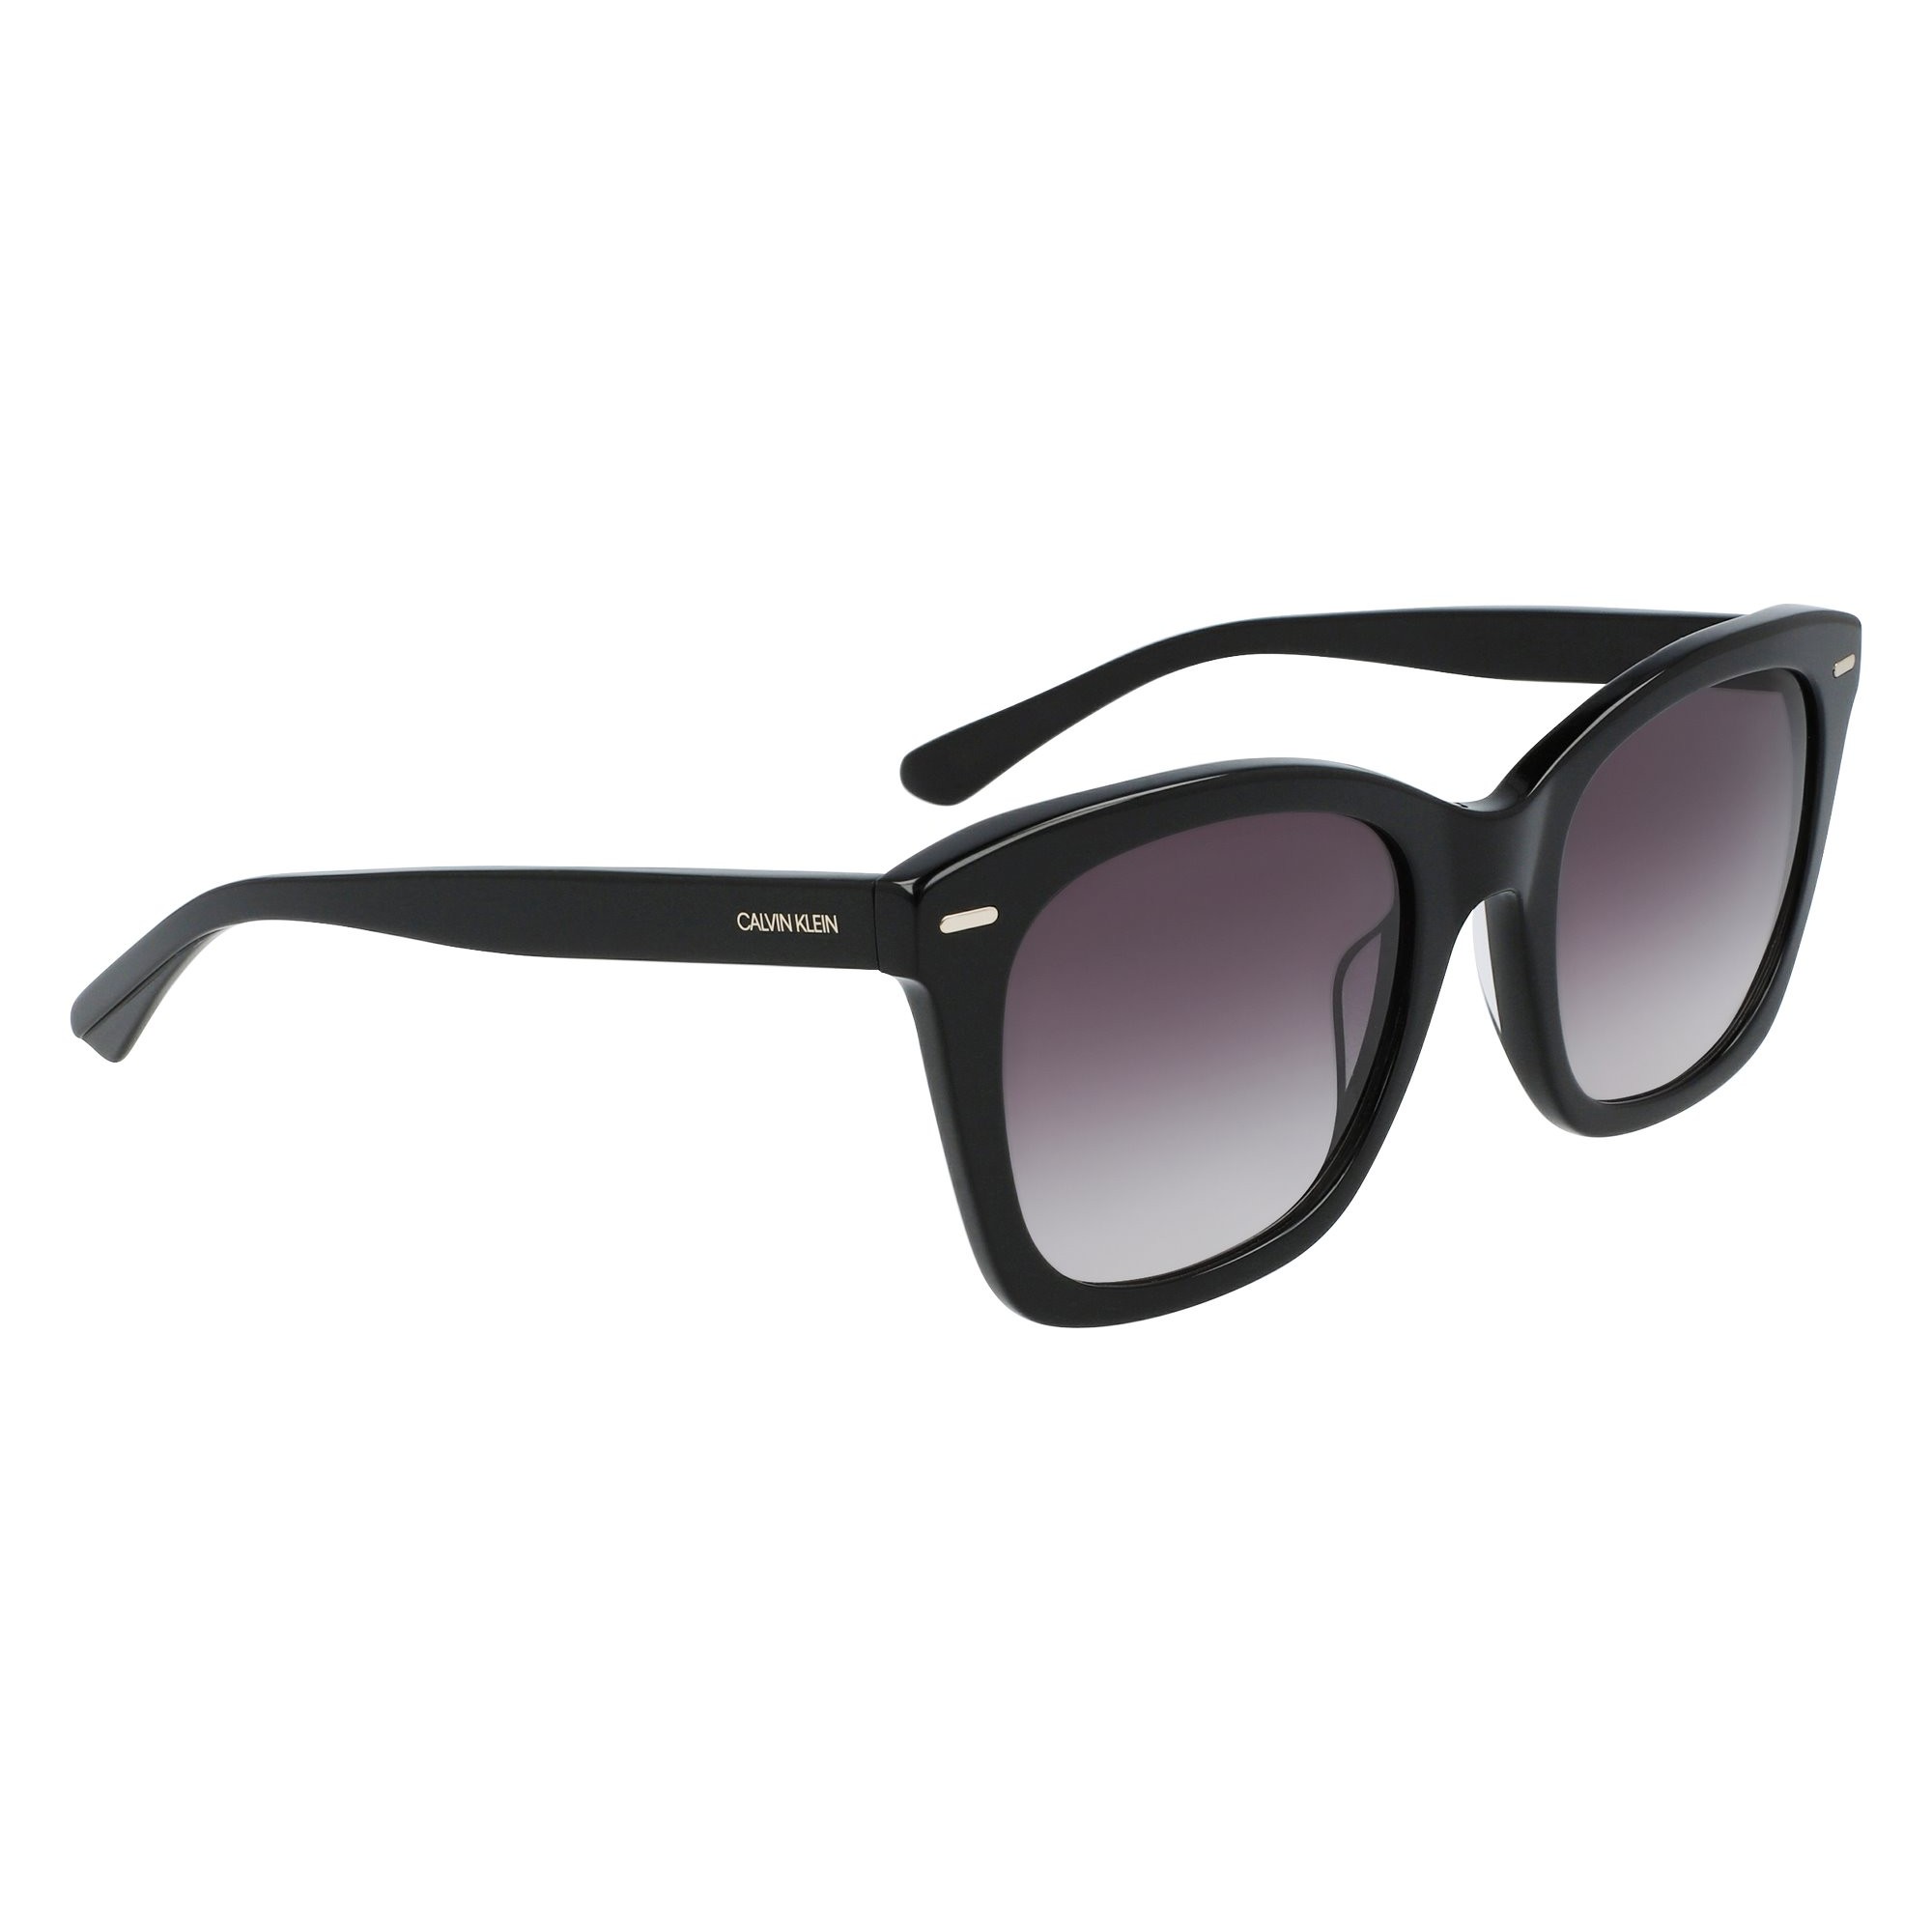 Calvin Klein CK 21506S - 001 Black | Sunglasses Woman